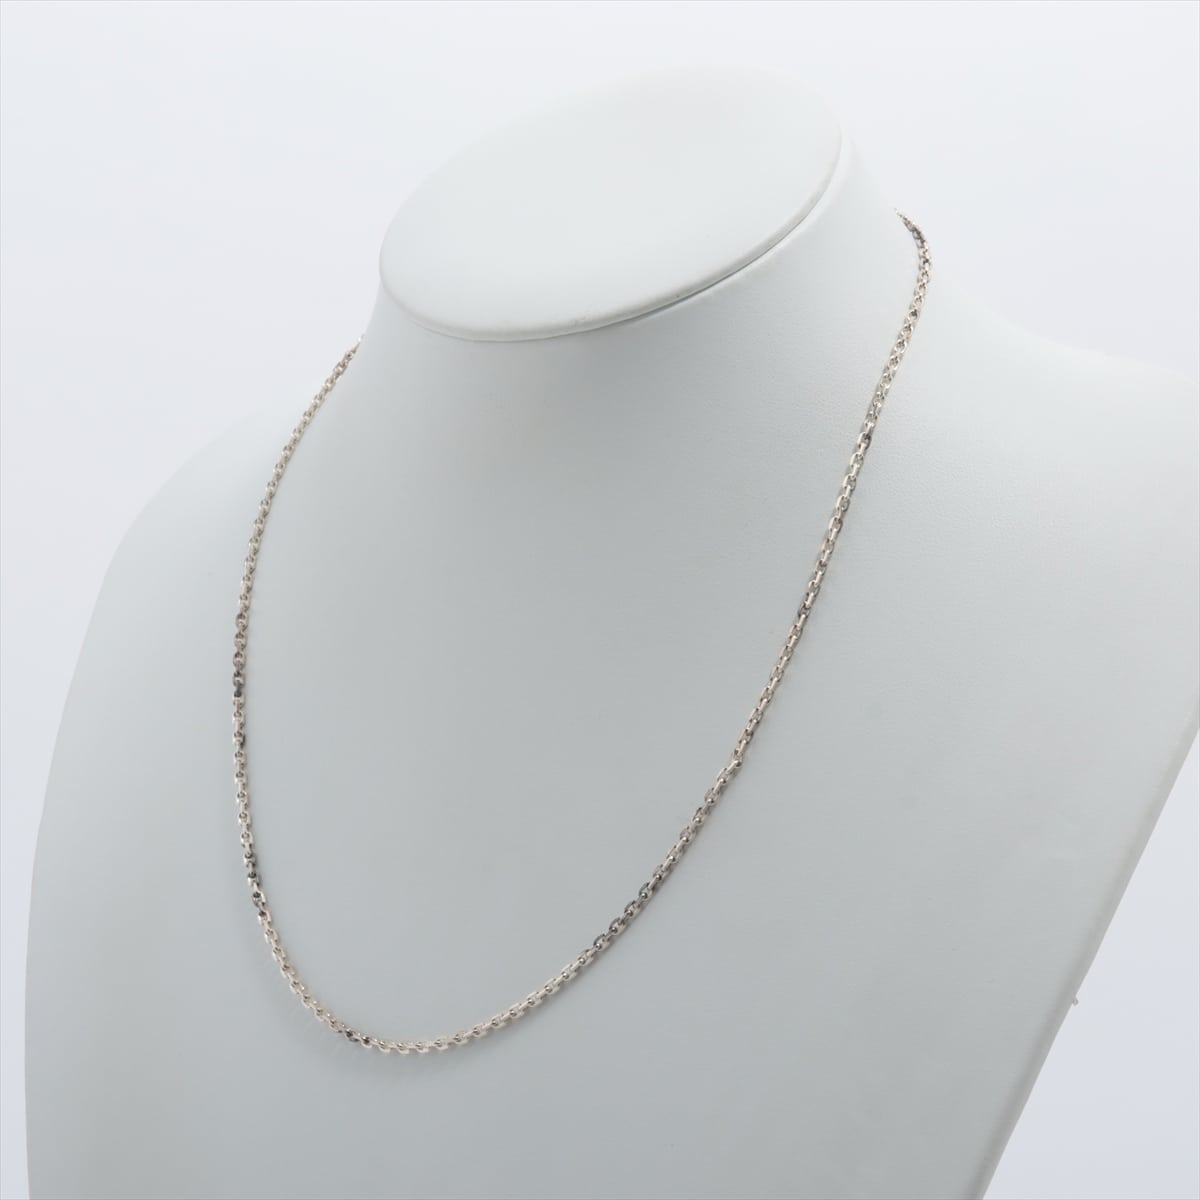 Hermès Chain Necklace 925 6.8g Silver